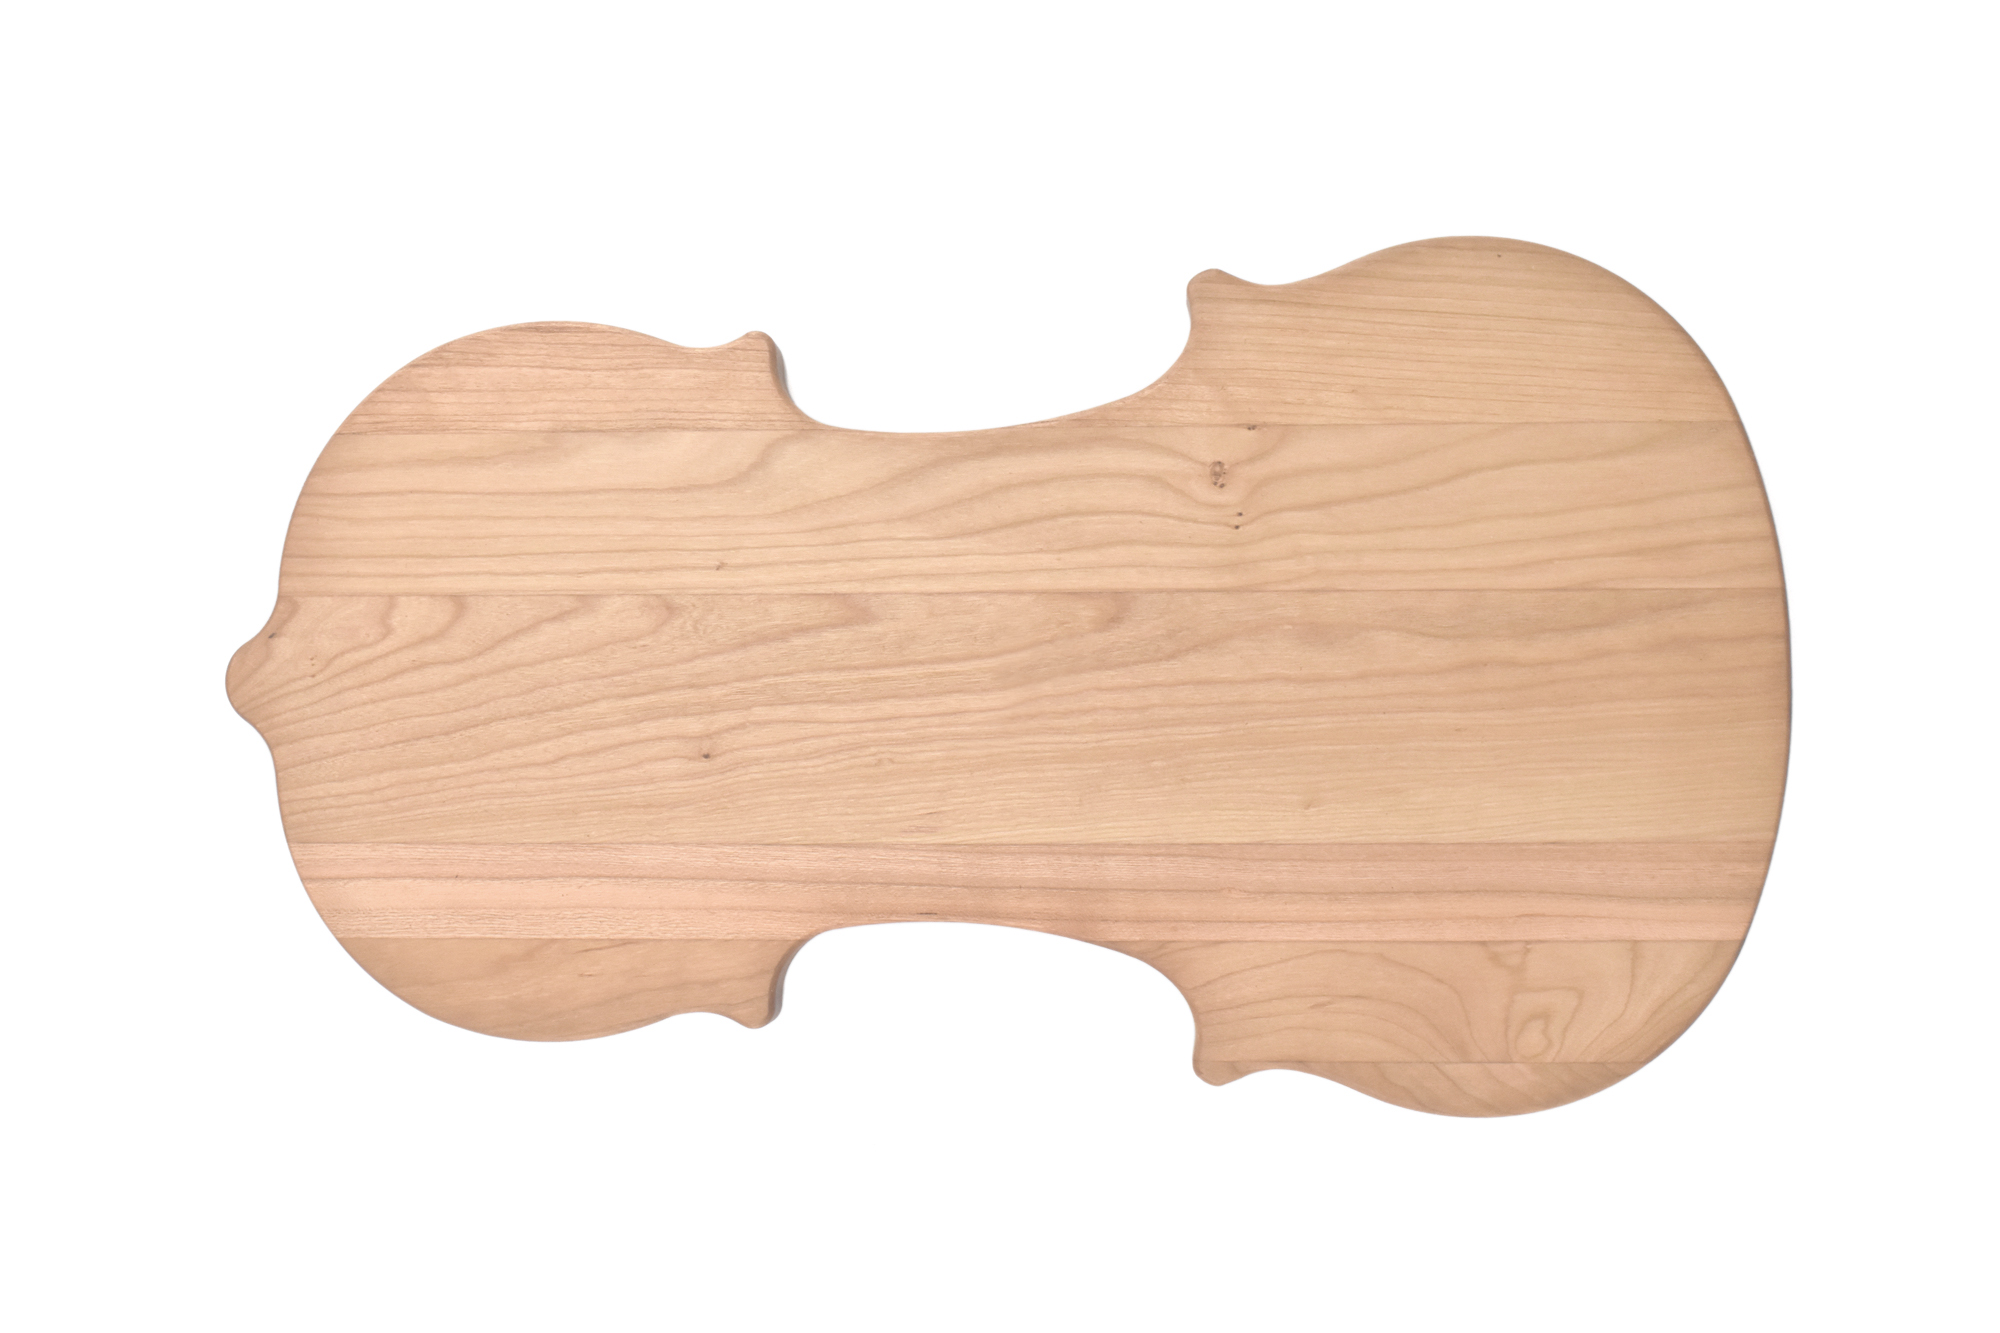 Cherry violon shaped cutting board